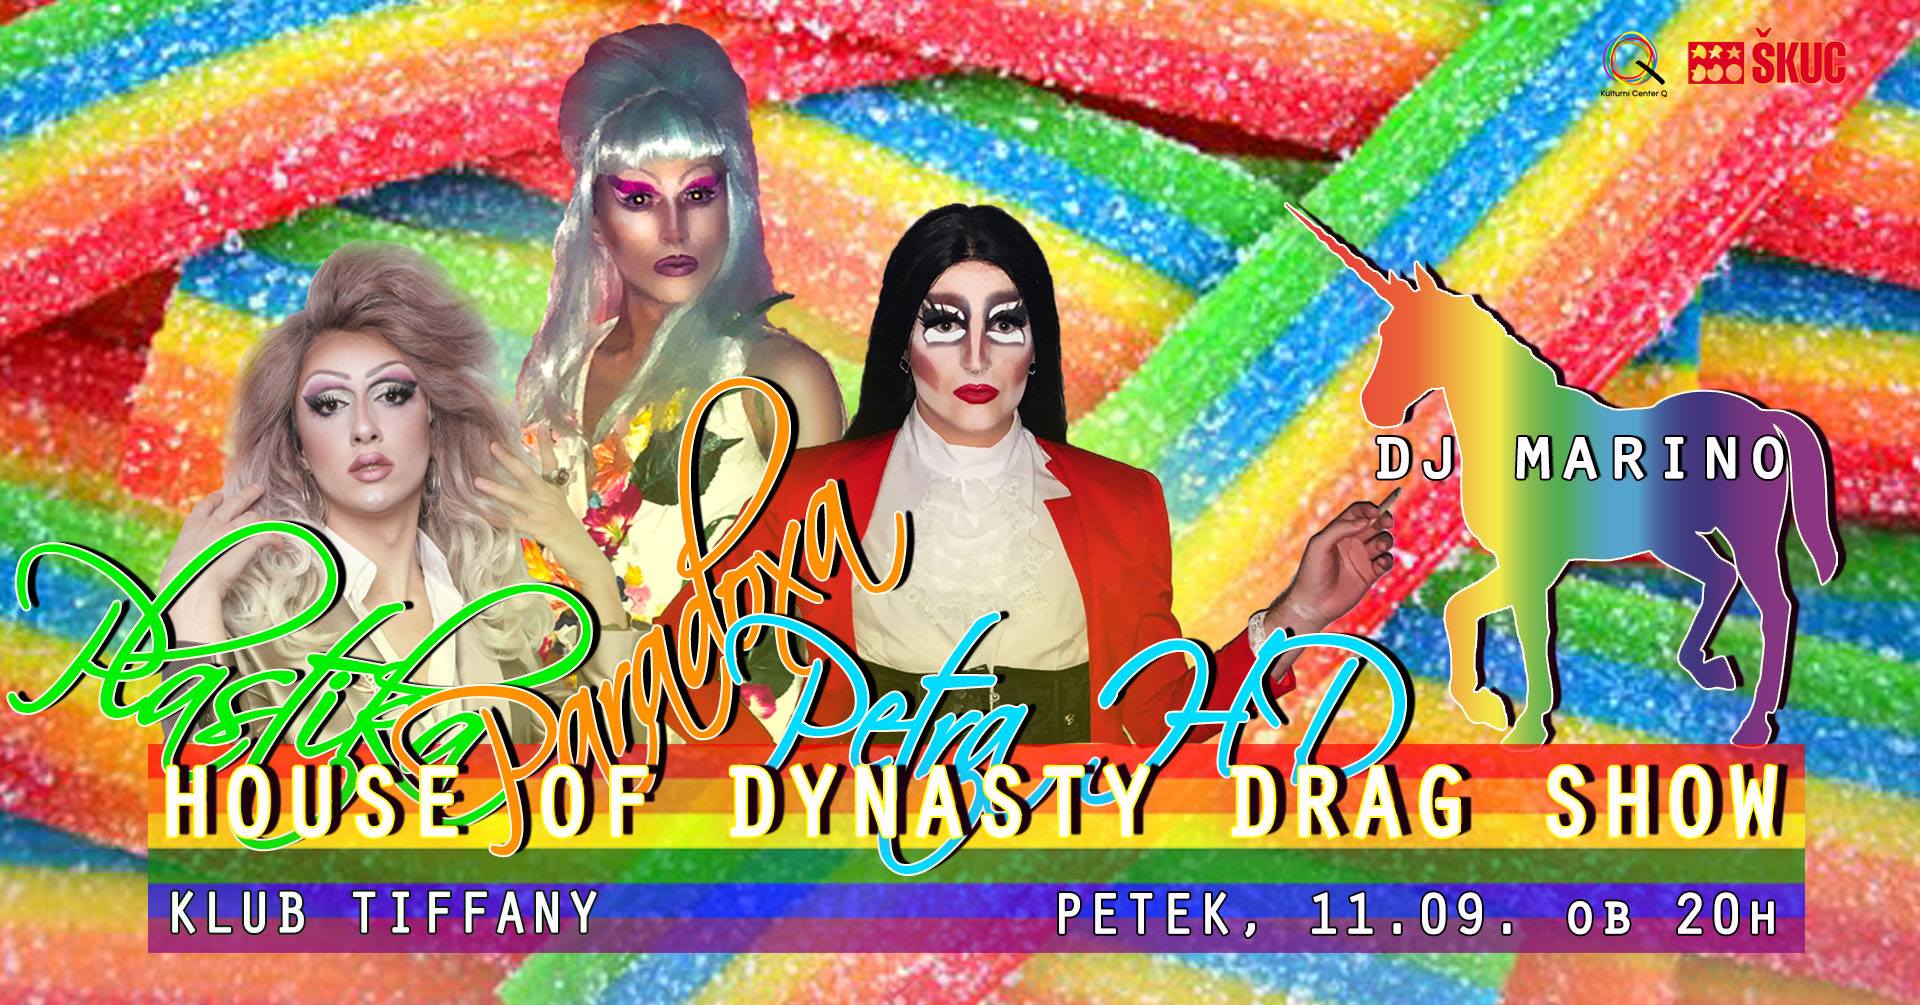 House of Dynasty Drag show